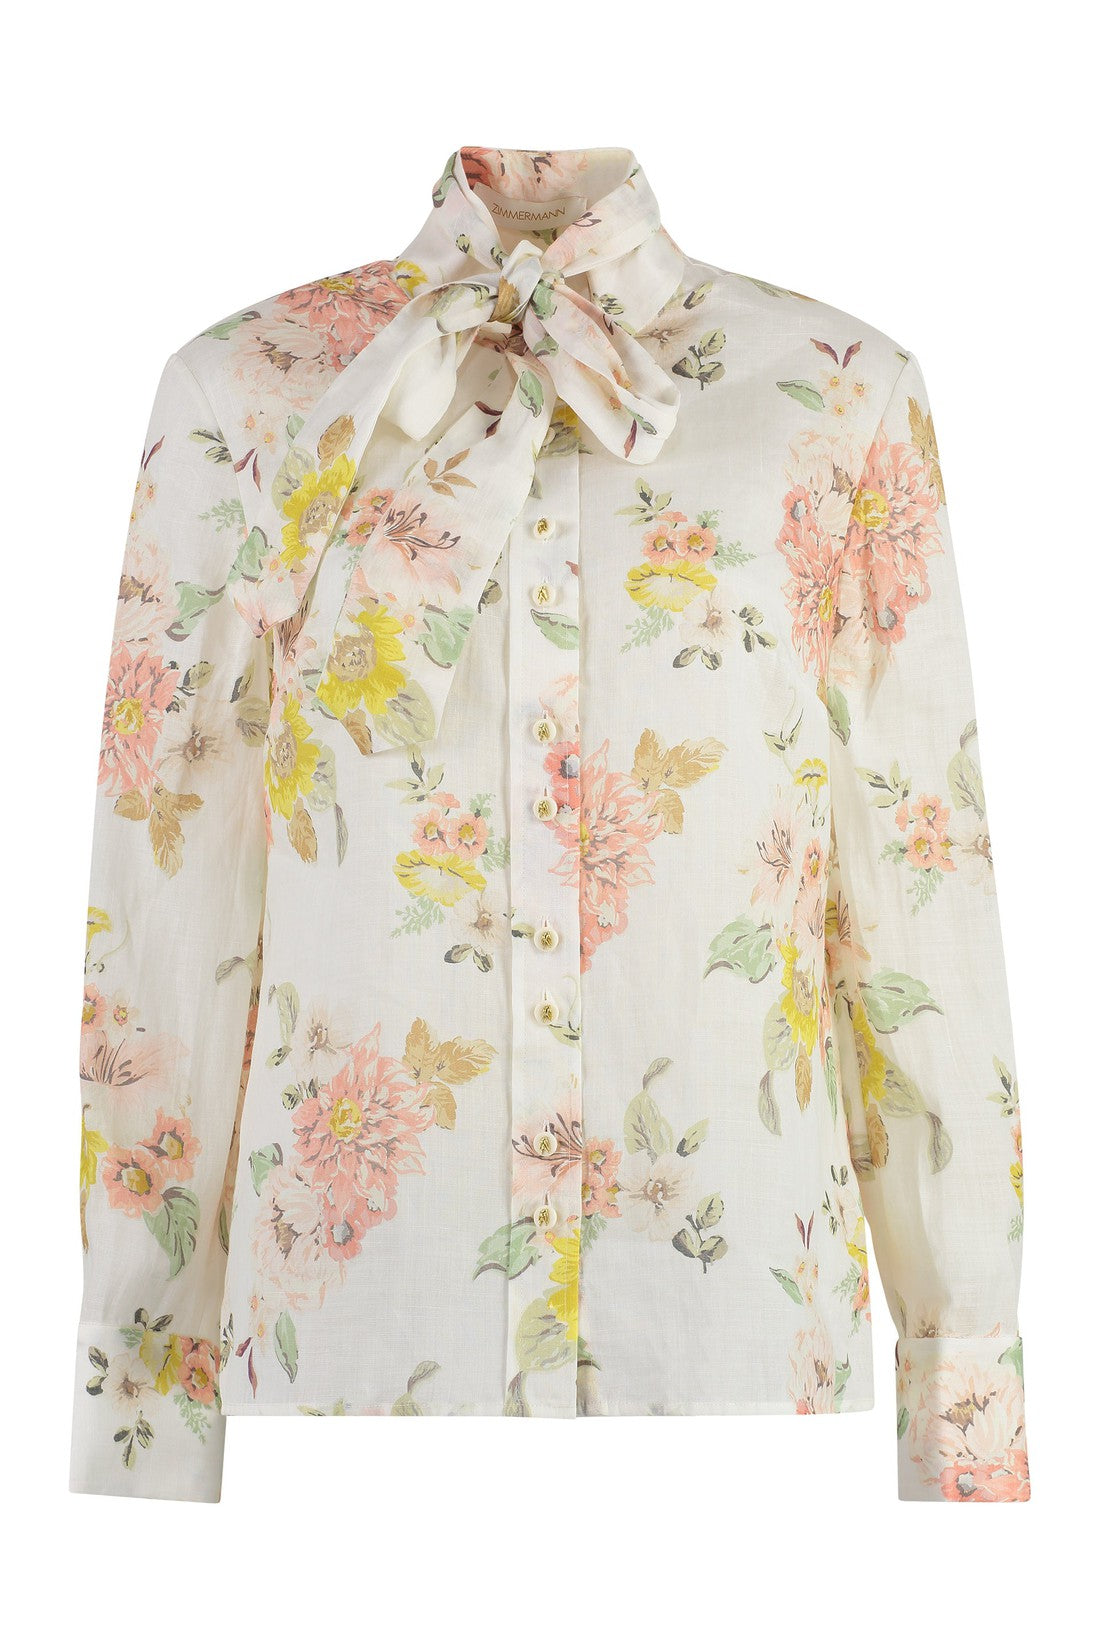 Zimmermann-OUTLET-SALE-Printed satin blouse-ARCHIVIST